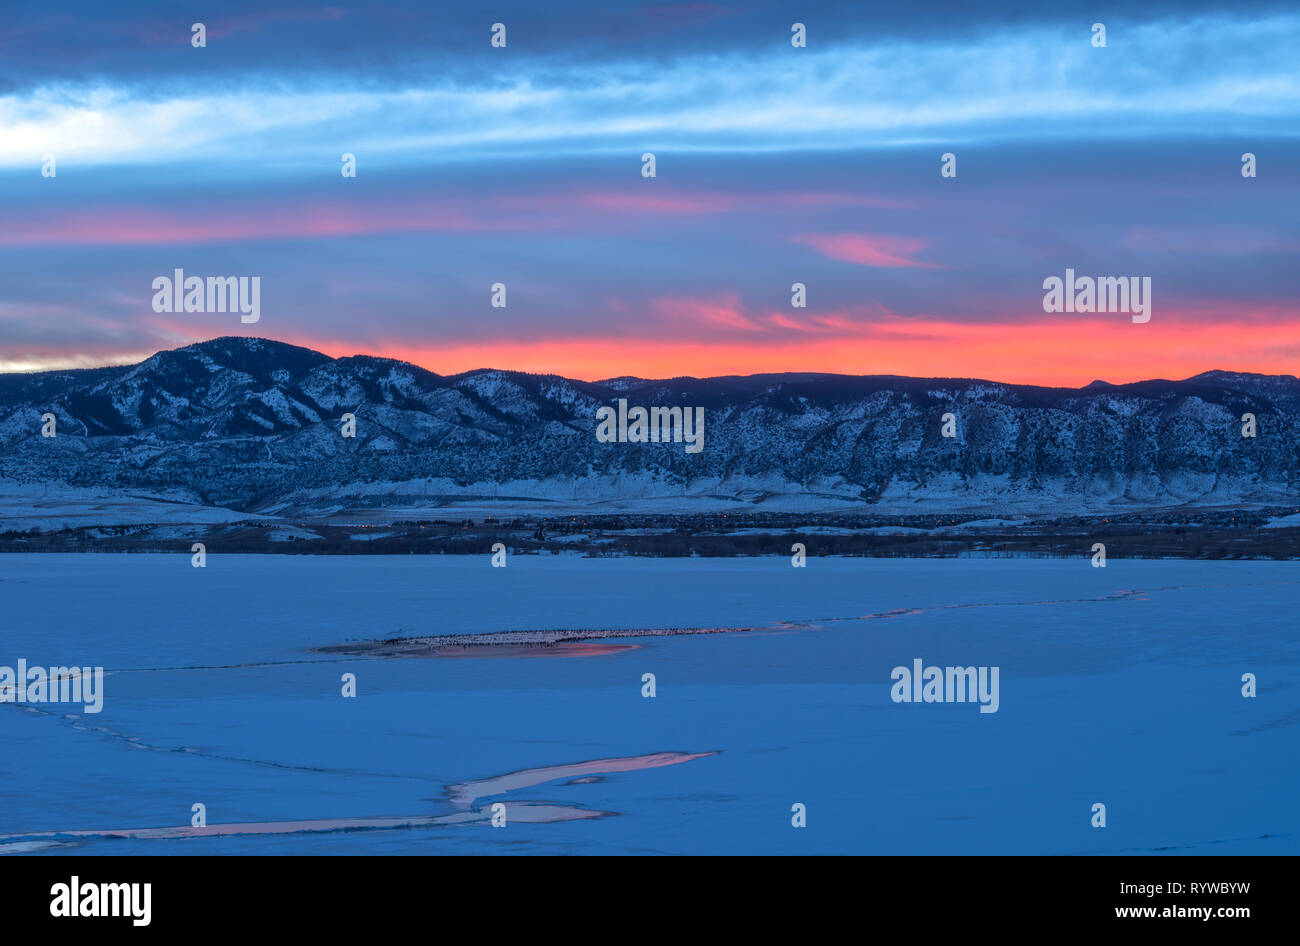 Sonnenuntergang Winter Mountain Lake - Bunte Sonnenuntergang an einem zugefrorenen Bergsee. Chatfield Reservoir in Chatfield State Park, Denver-Littleton, CO, USA. Stockfoto